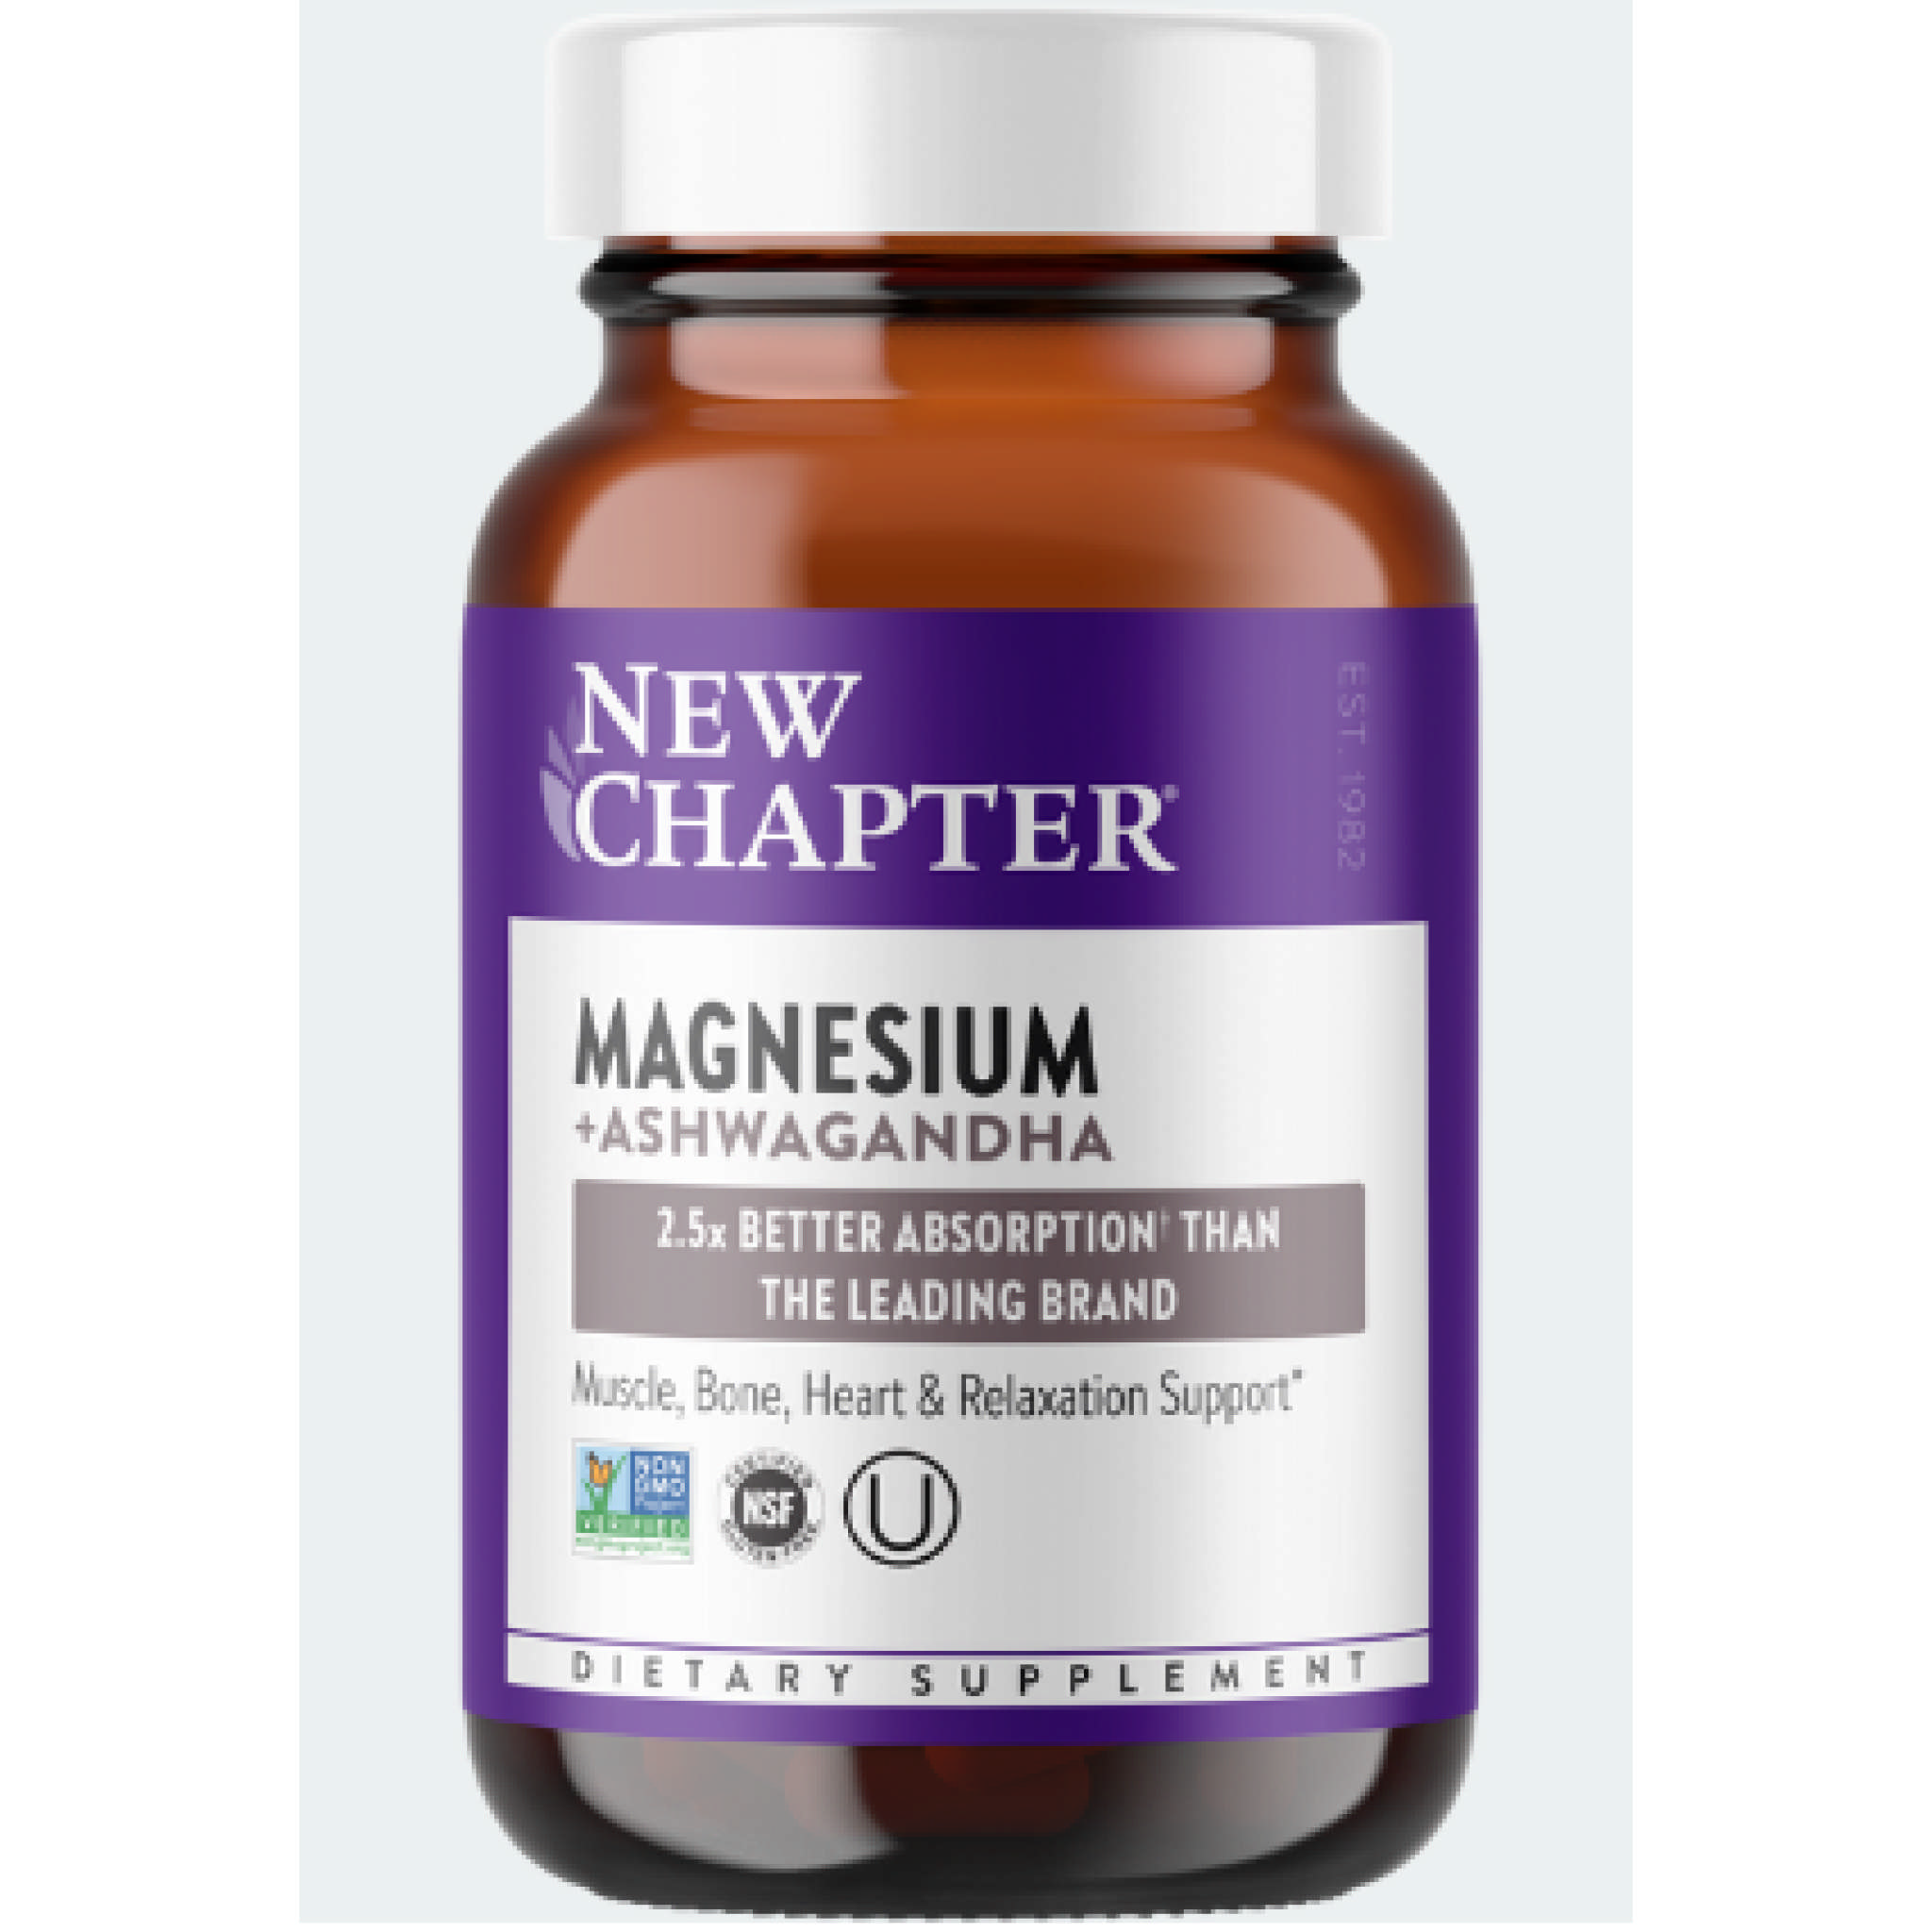 New Chapter - Magnesium + Ashwagandha tab